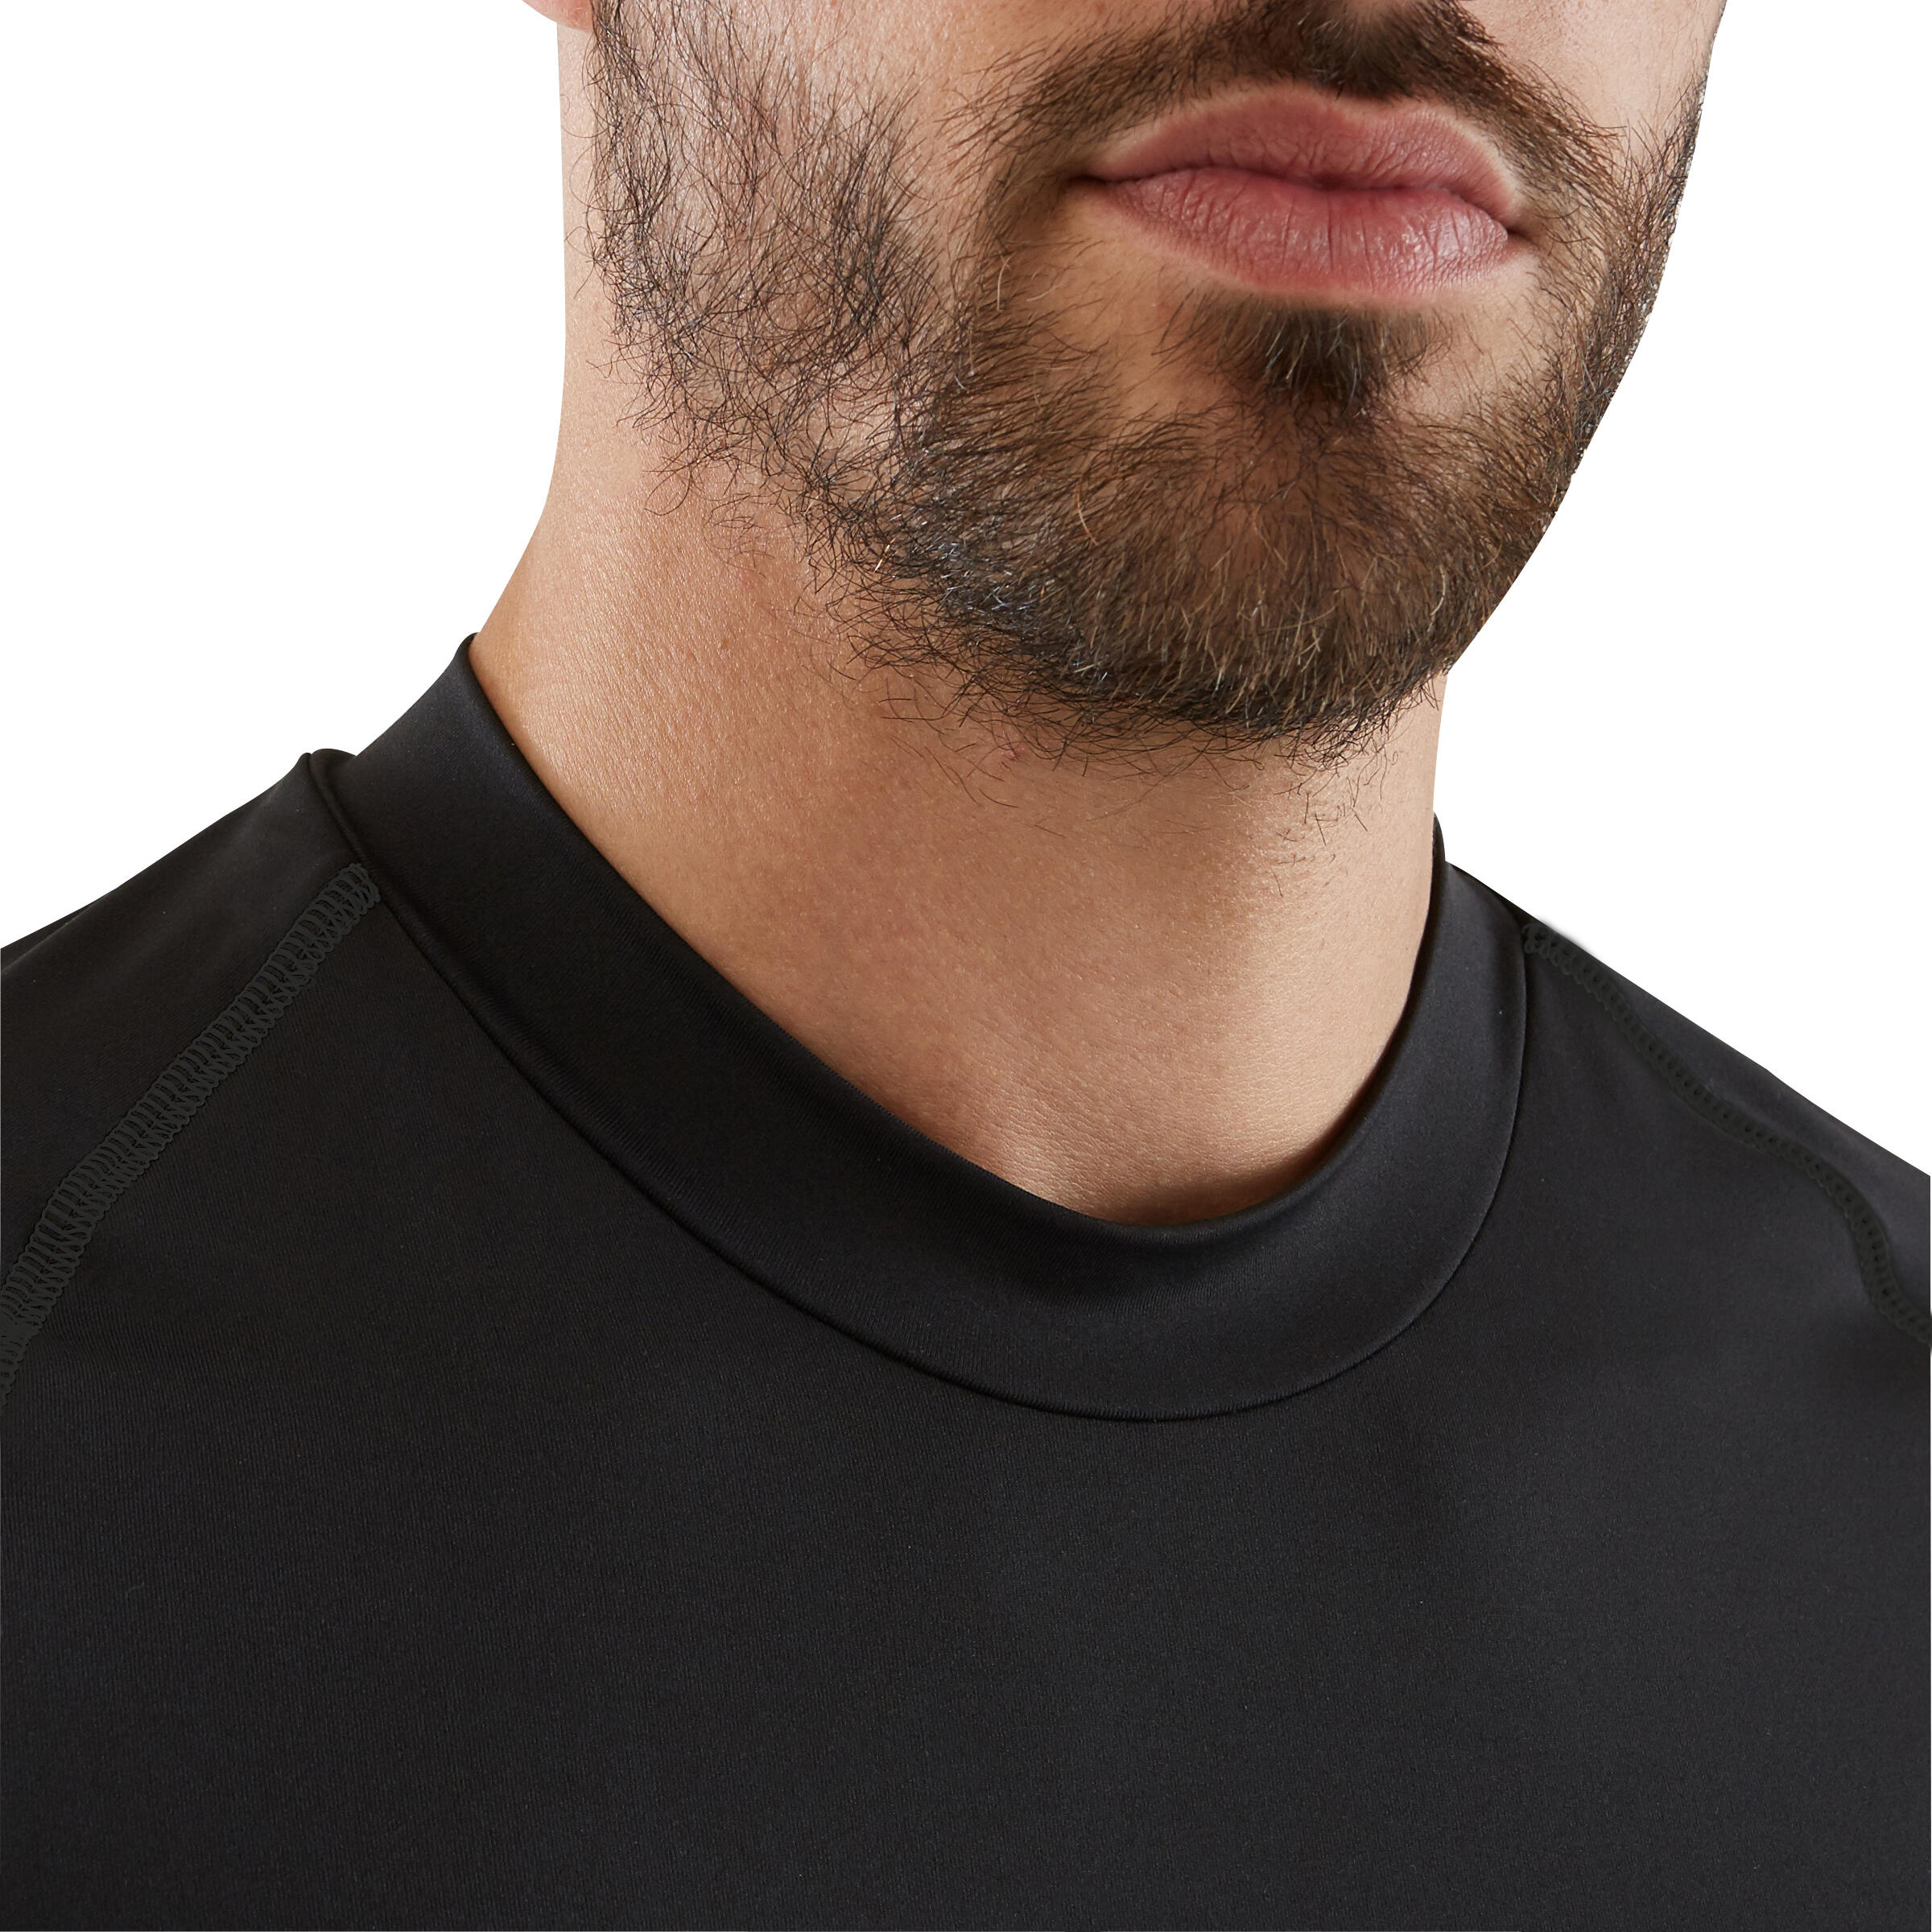 Decathlon Football Men Adult Long-Sleeved Football Base Layer Top  Keepcomfort - Black - Kipsta